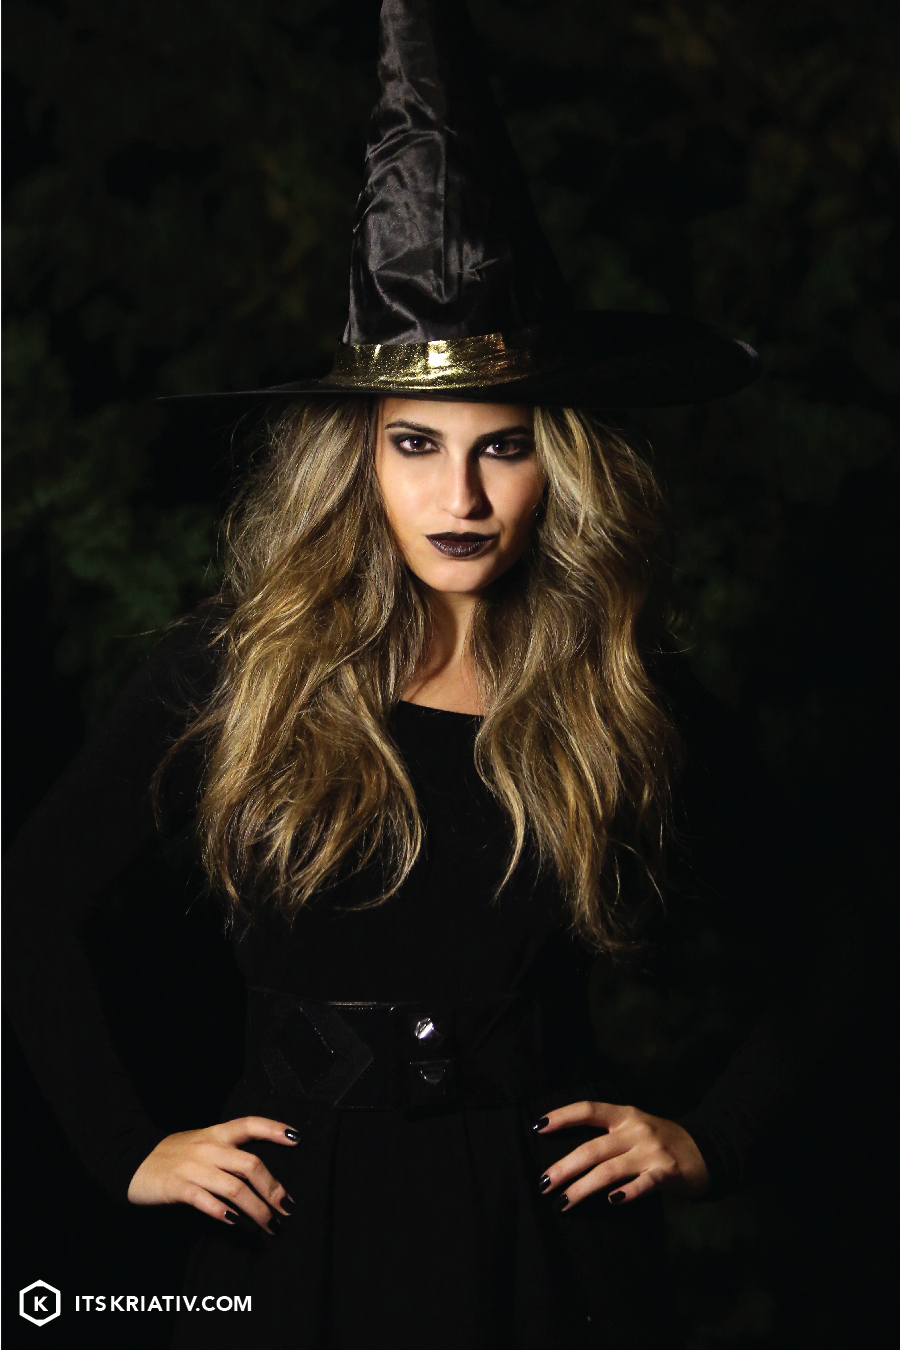 Oct_13_Fashion-Halloween-Witch-01a-01.jpg